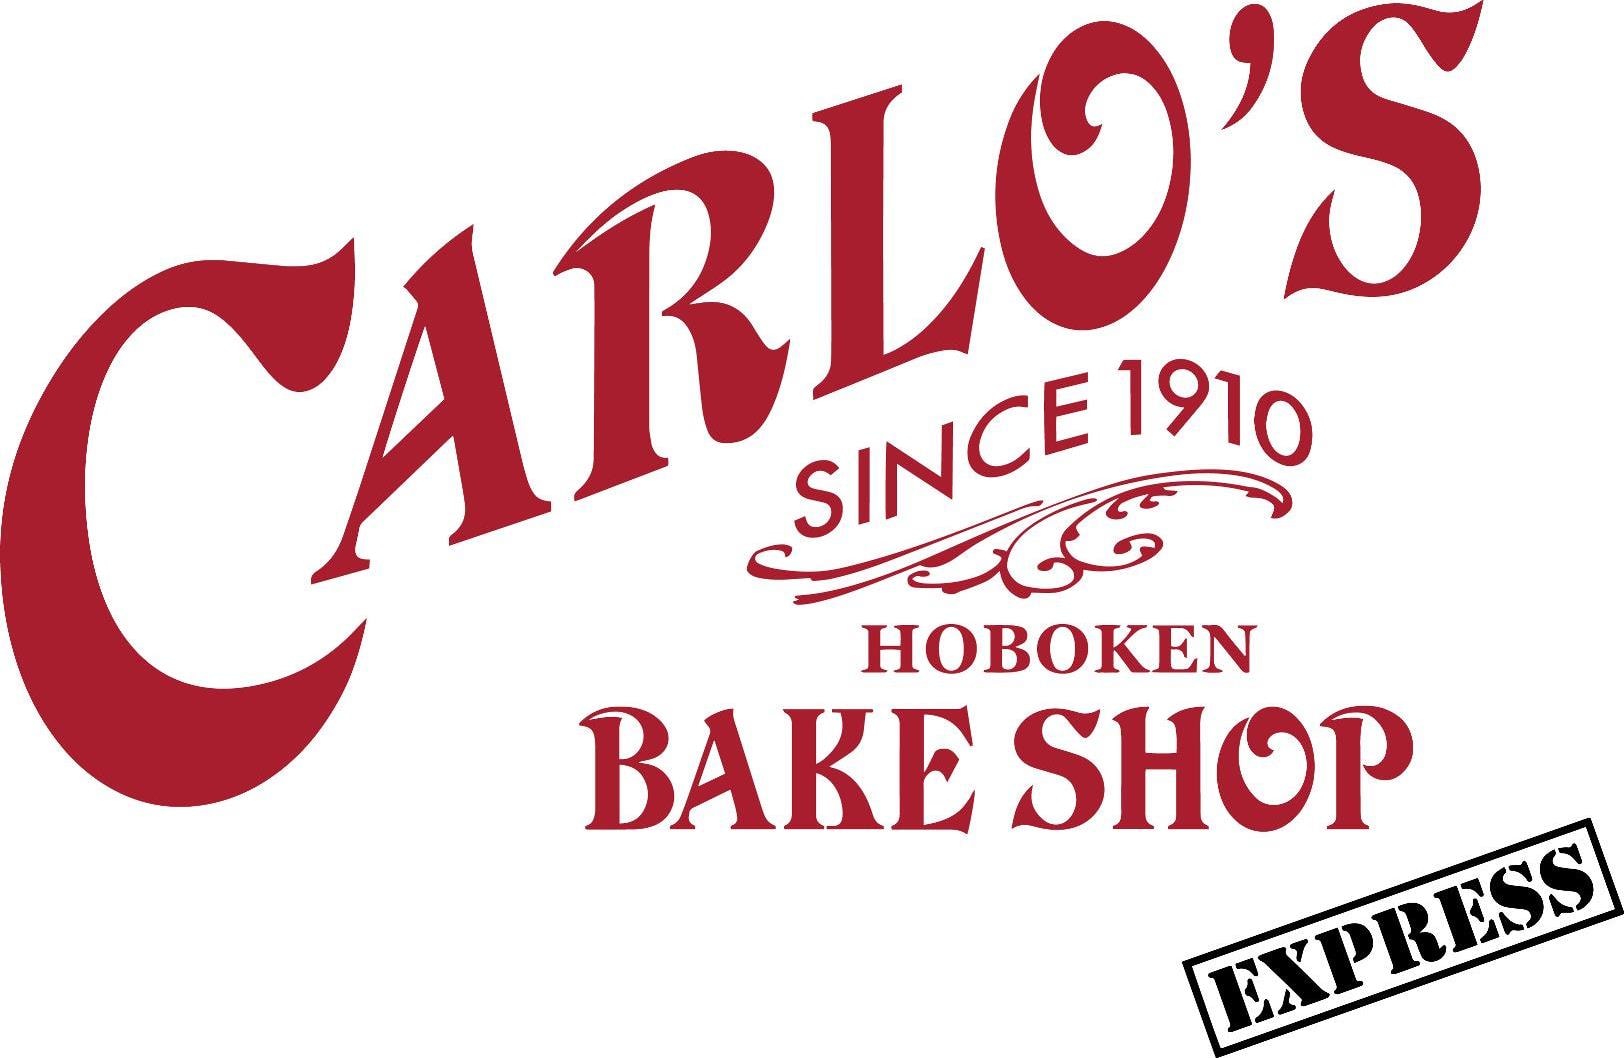 Carlo’s Bakery (Cake ATM) logo